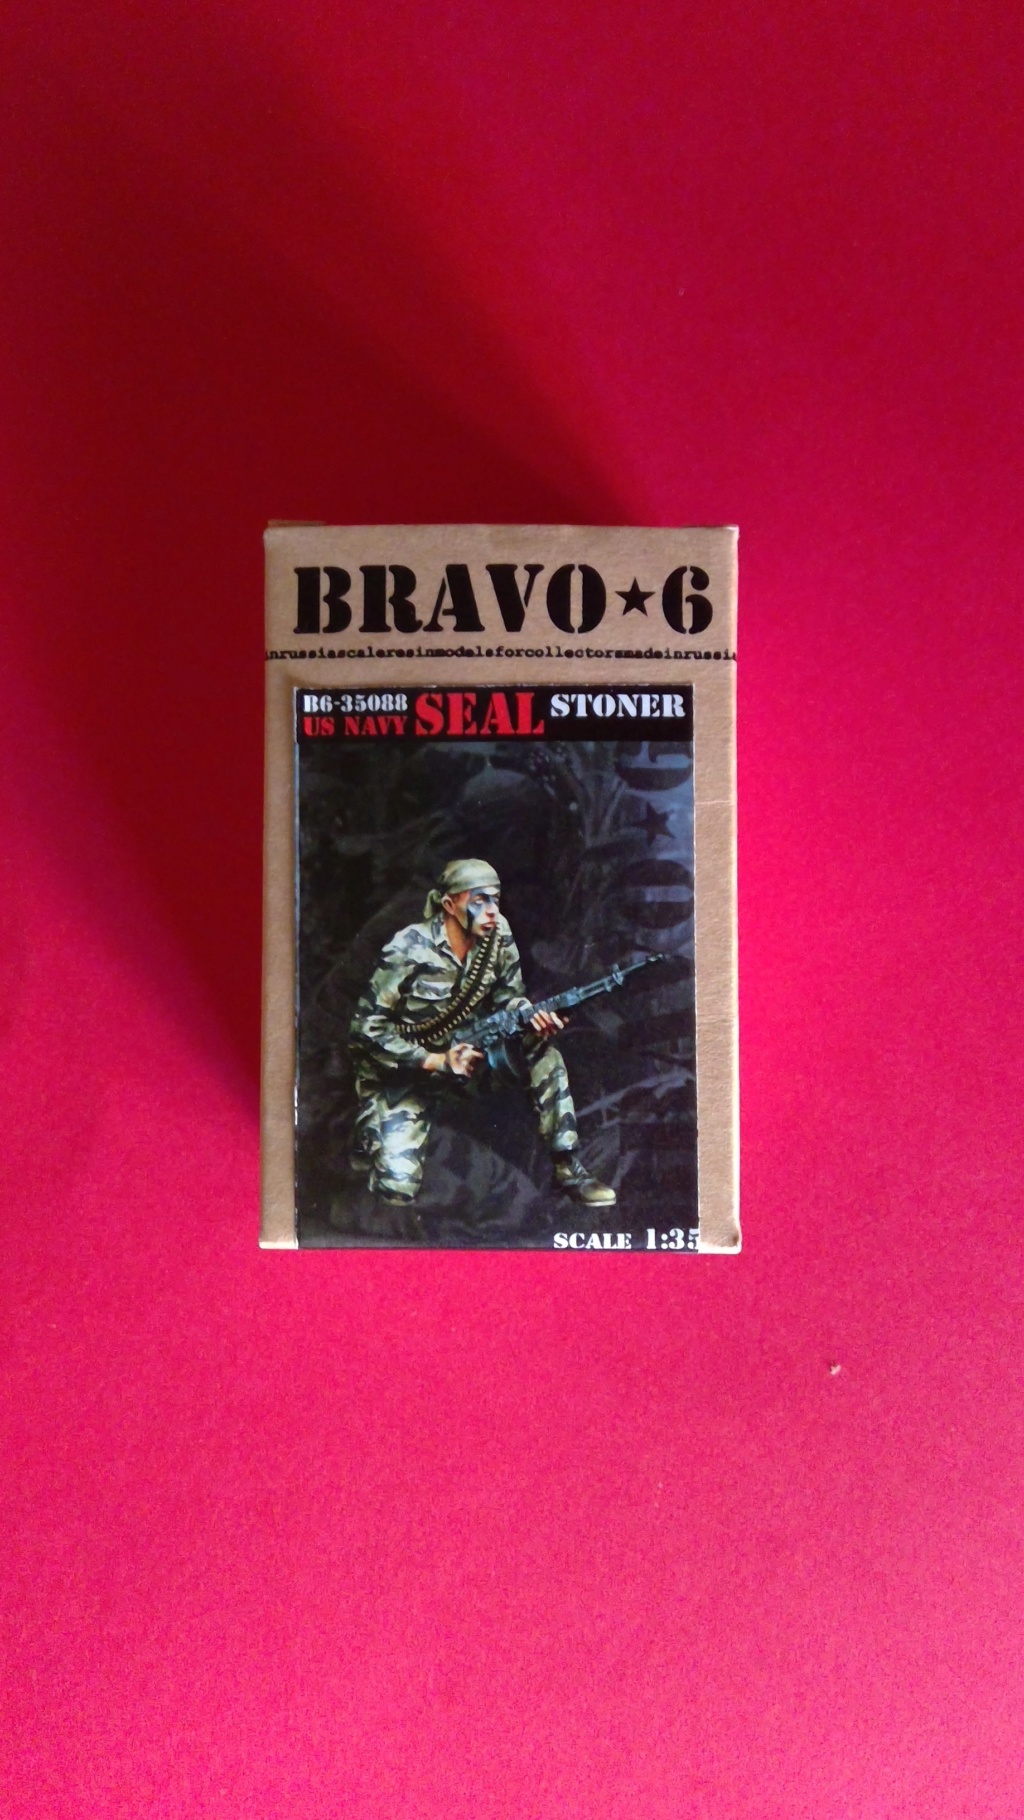 [BRAVO 6] US NAVVY SEAL STONER VIETNAM 1/35ème Réf B6 35088 Bravo_10